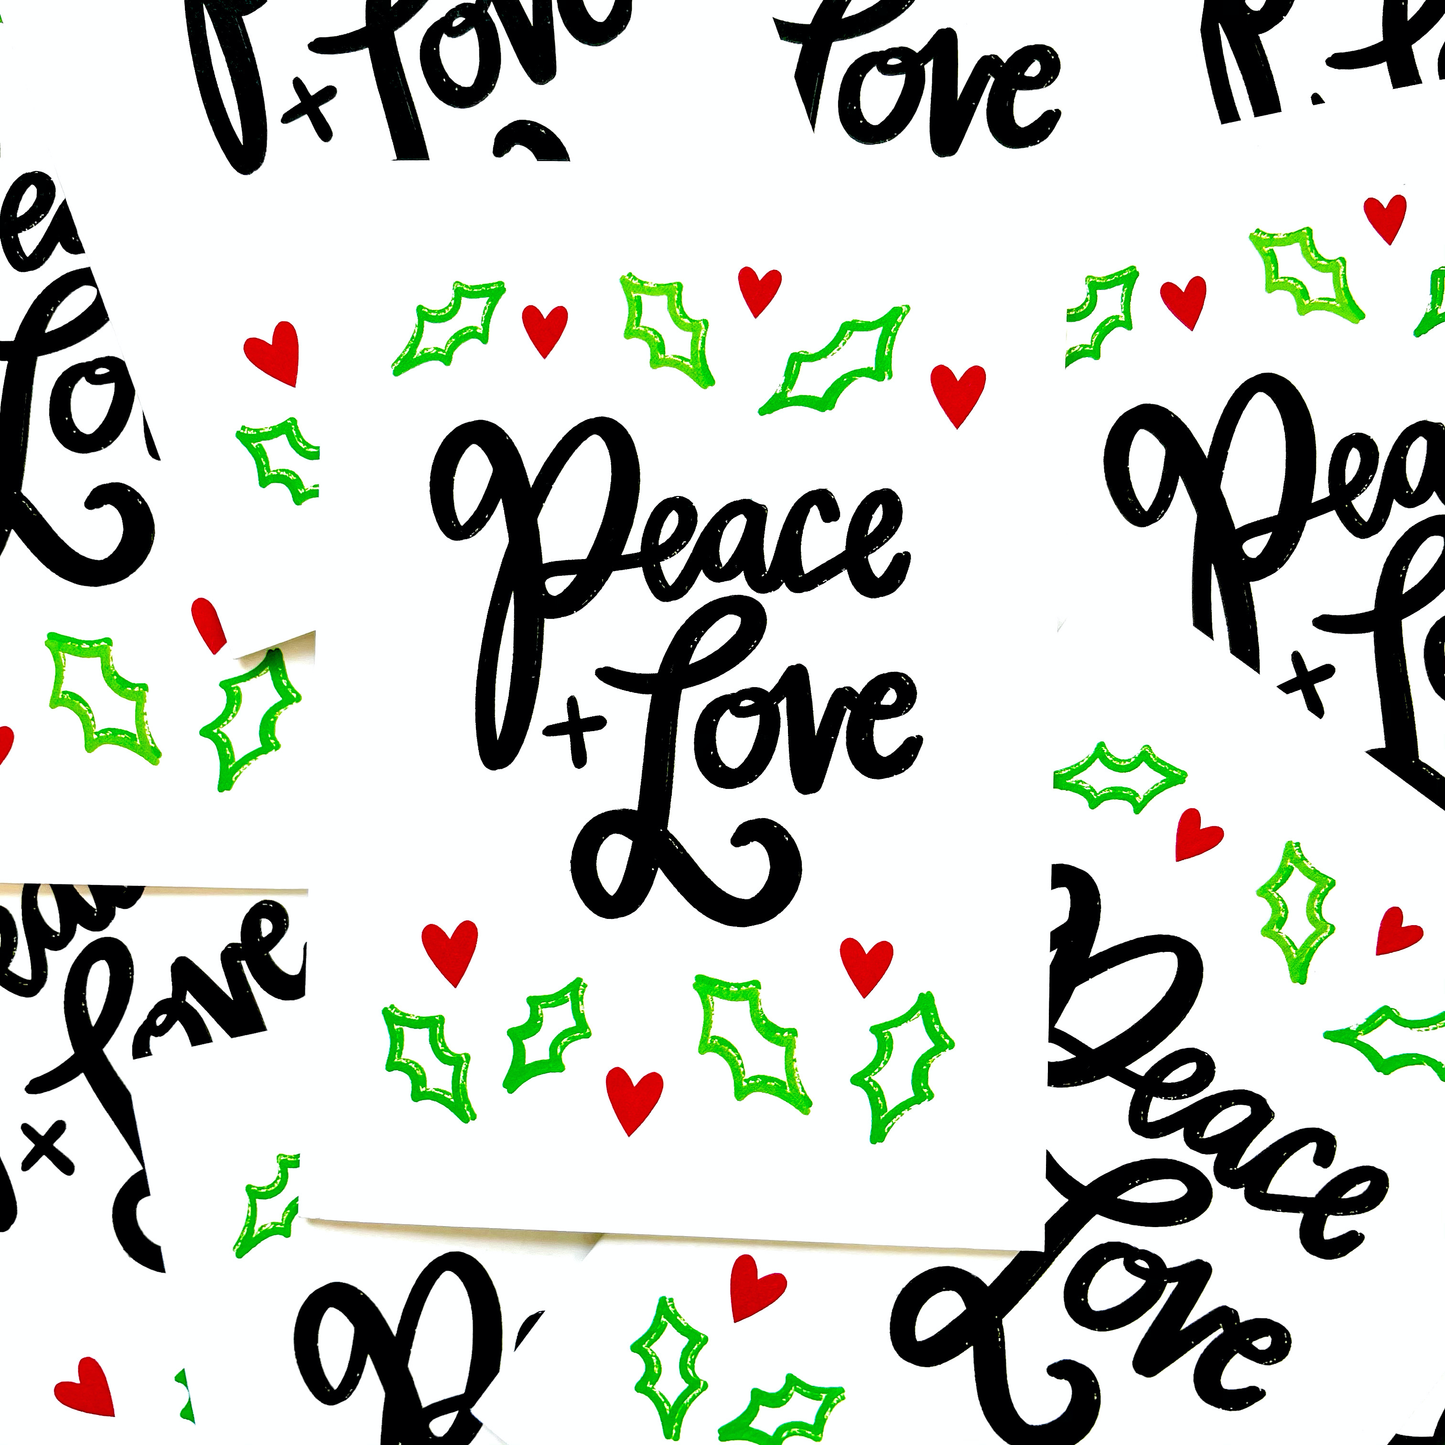 PEACE + LOVE CARD